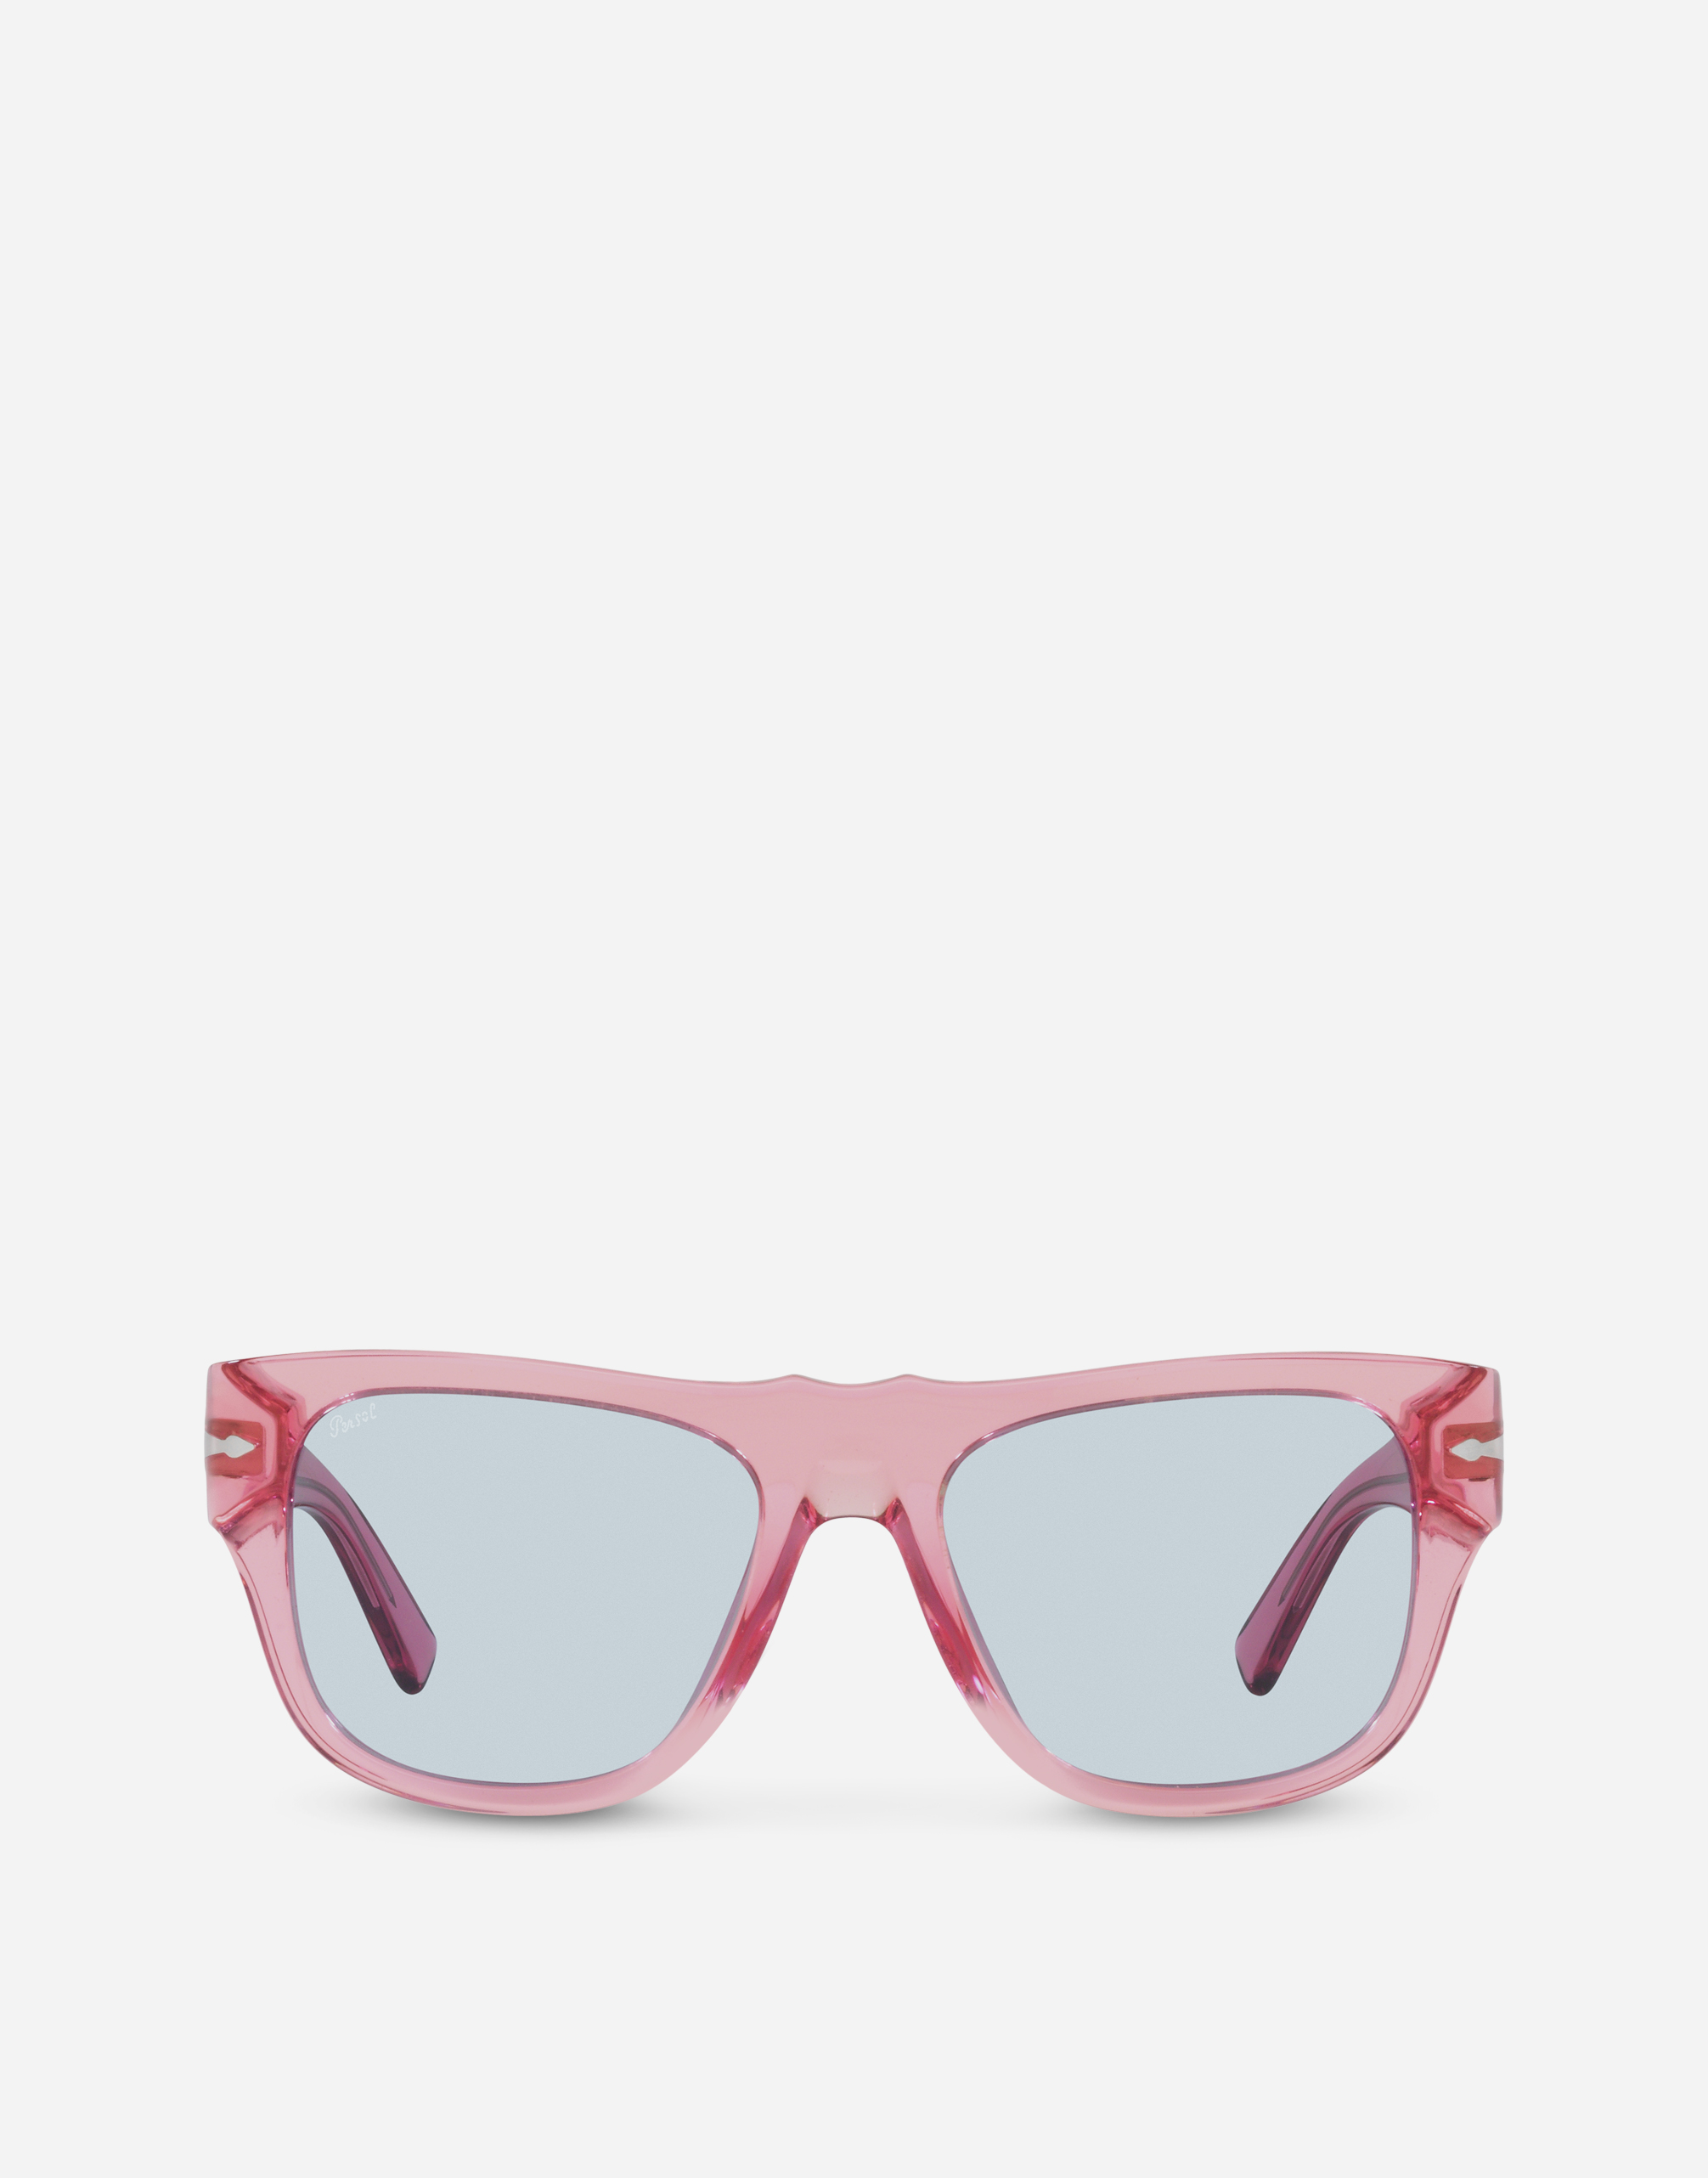 Dolce&Gabbana x Persol sunglasses in pink transparent